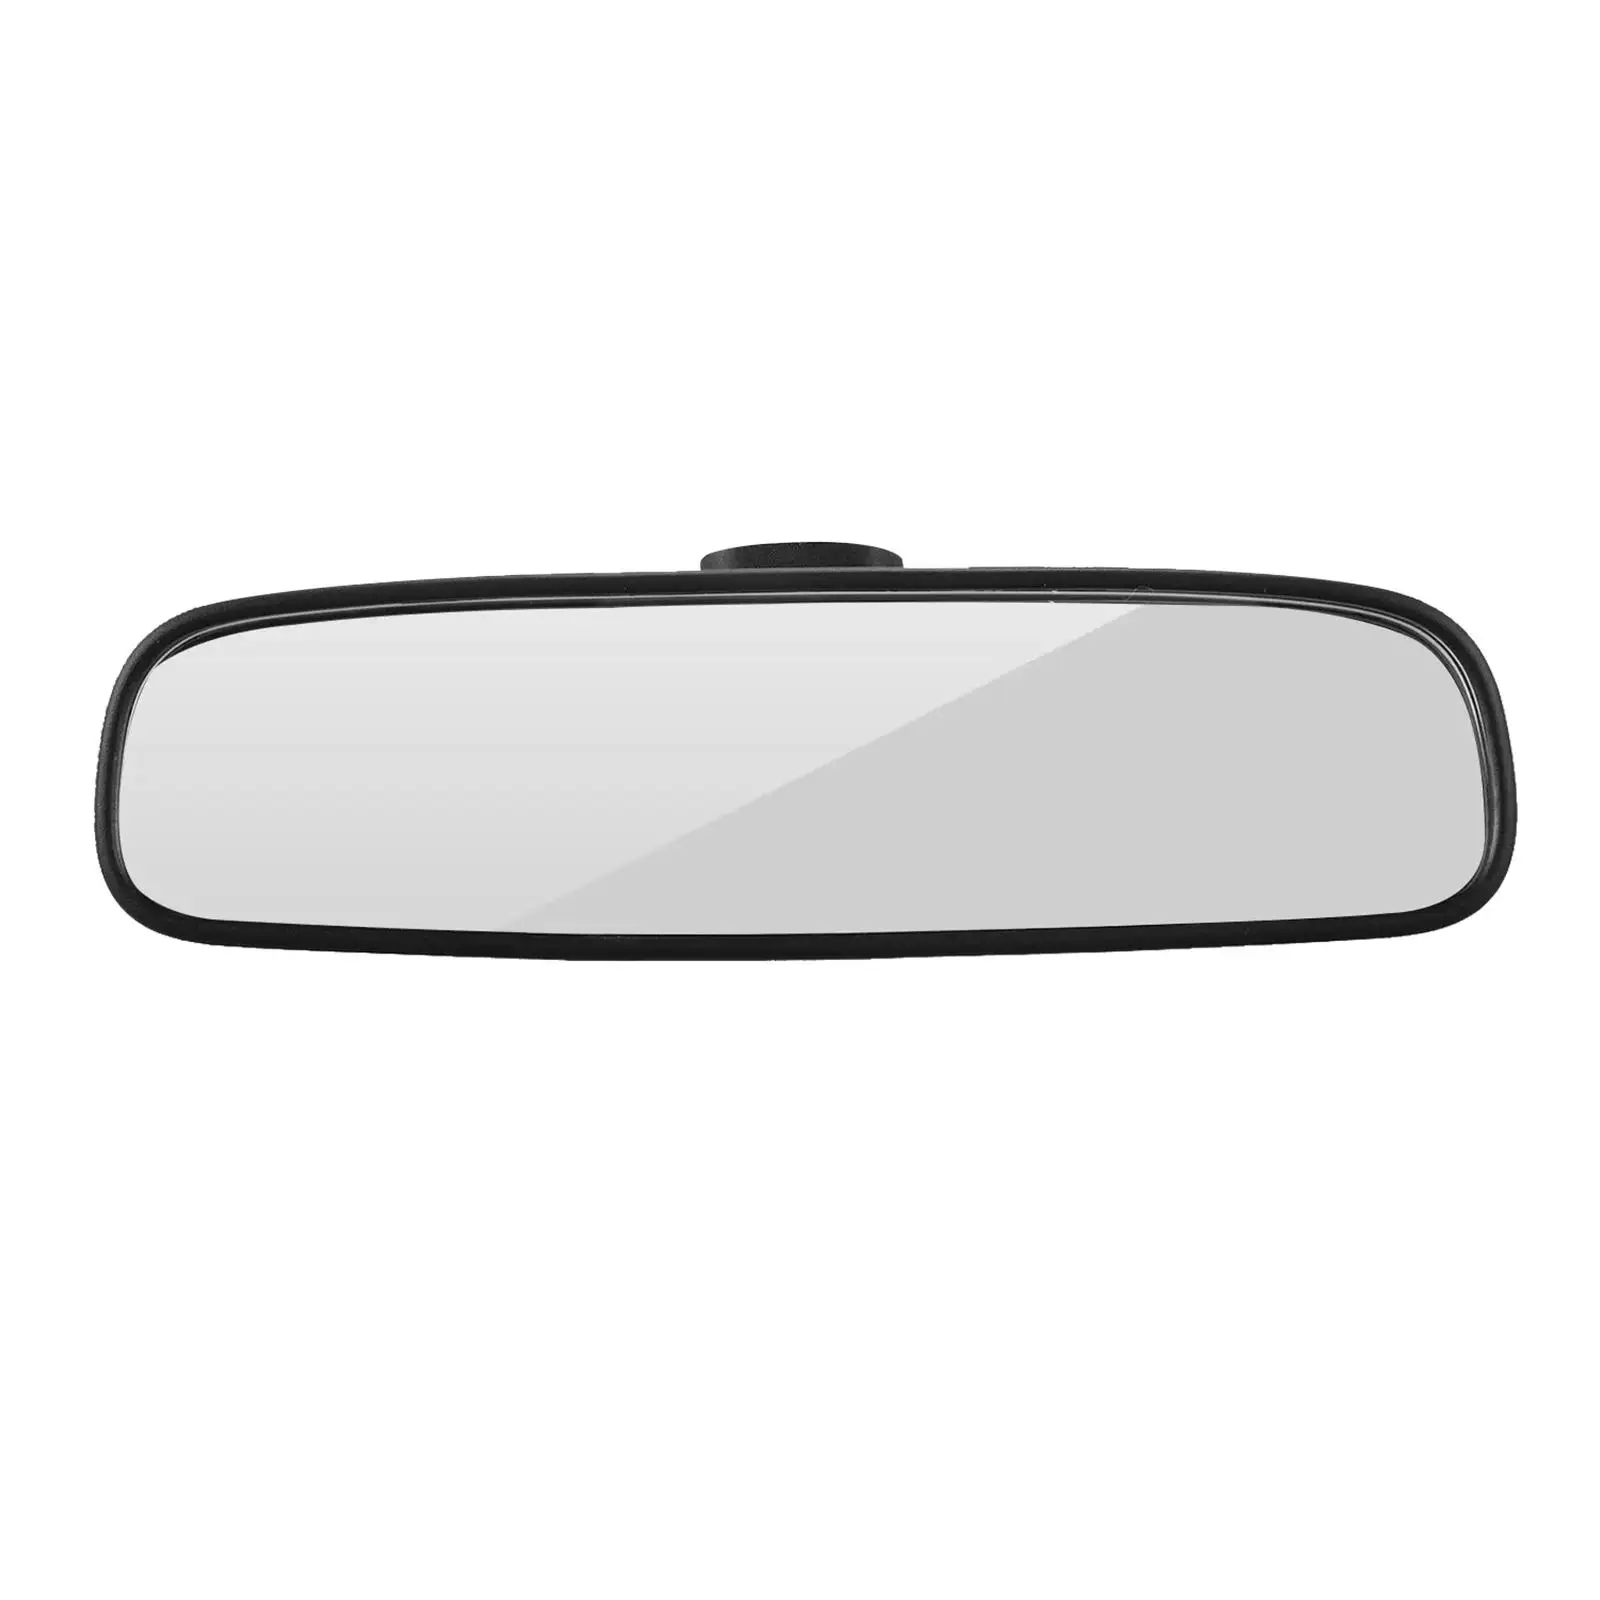 Interior Rear View Mirror 76400sea014 Easy to Install Accessory Day Night Rearview Mirror 76400sea004 76400sea024 for Civic